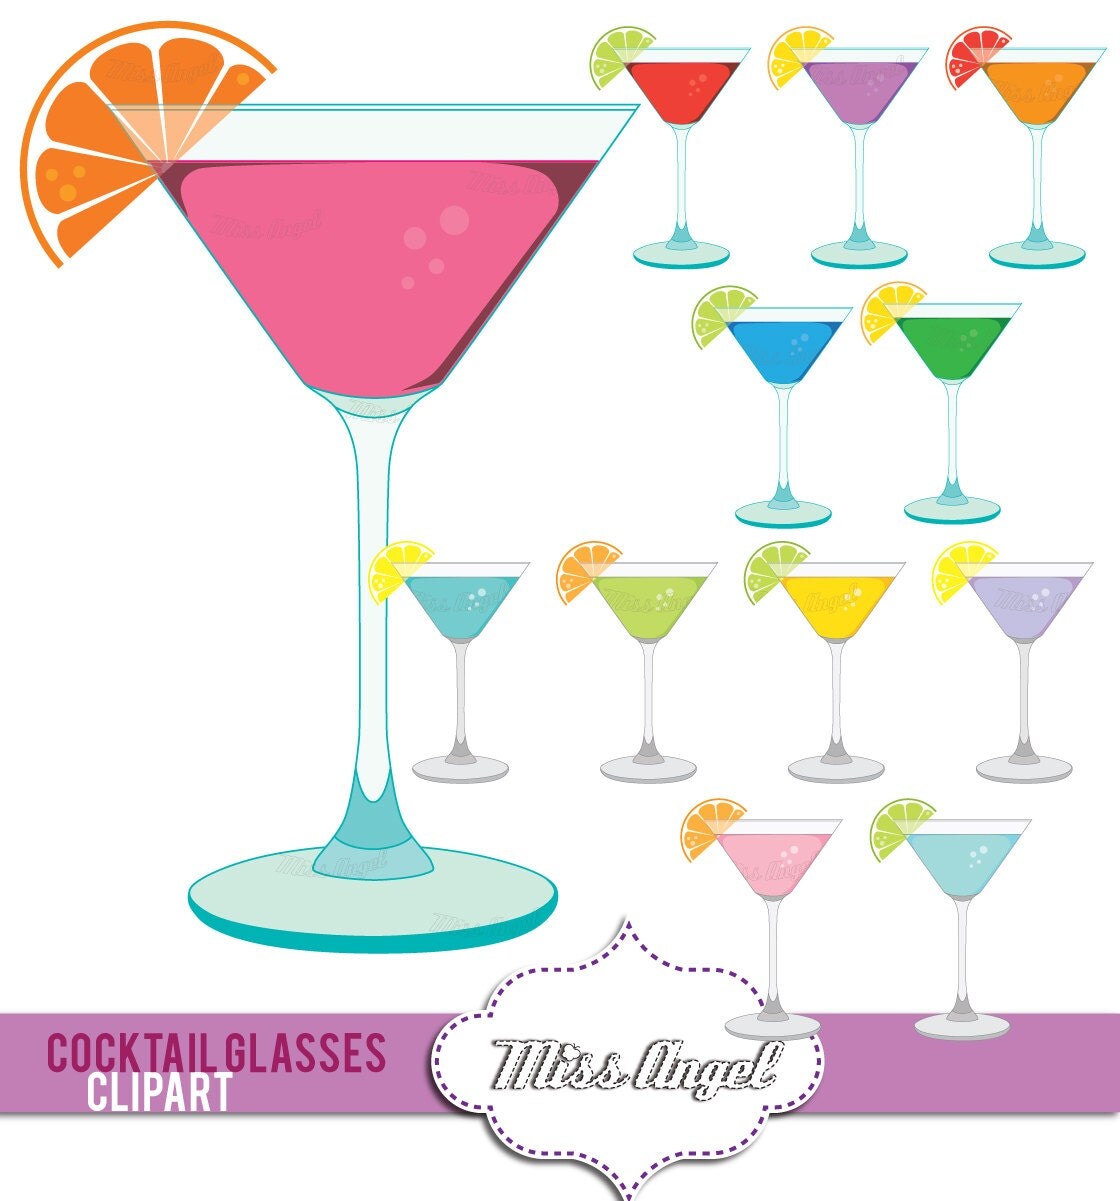 Martini Glasses Clipart Colorful Digital Cocktail Glasses